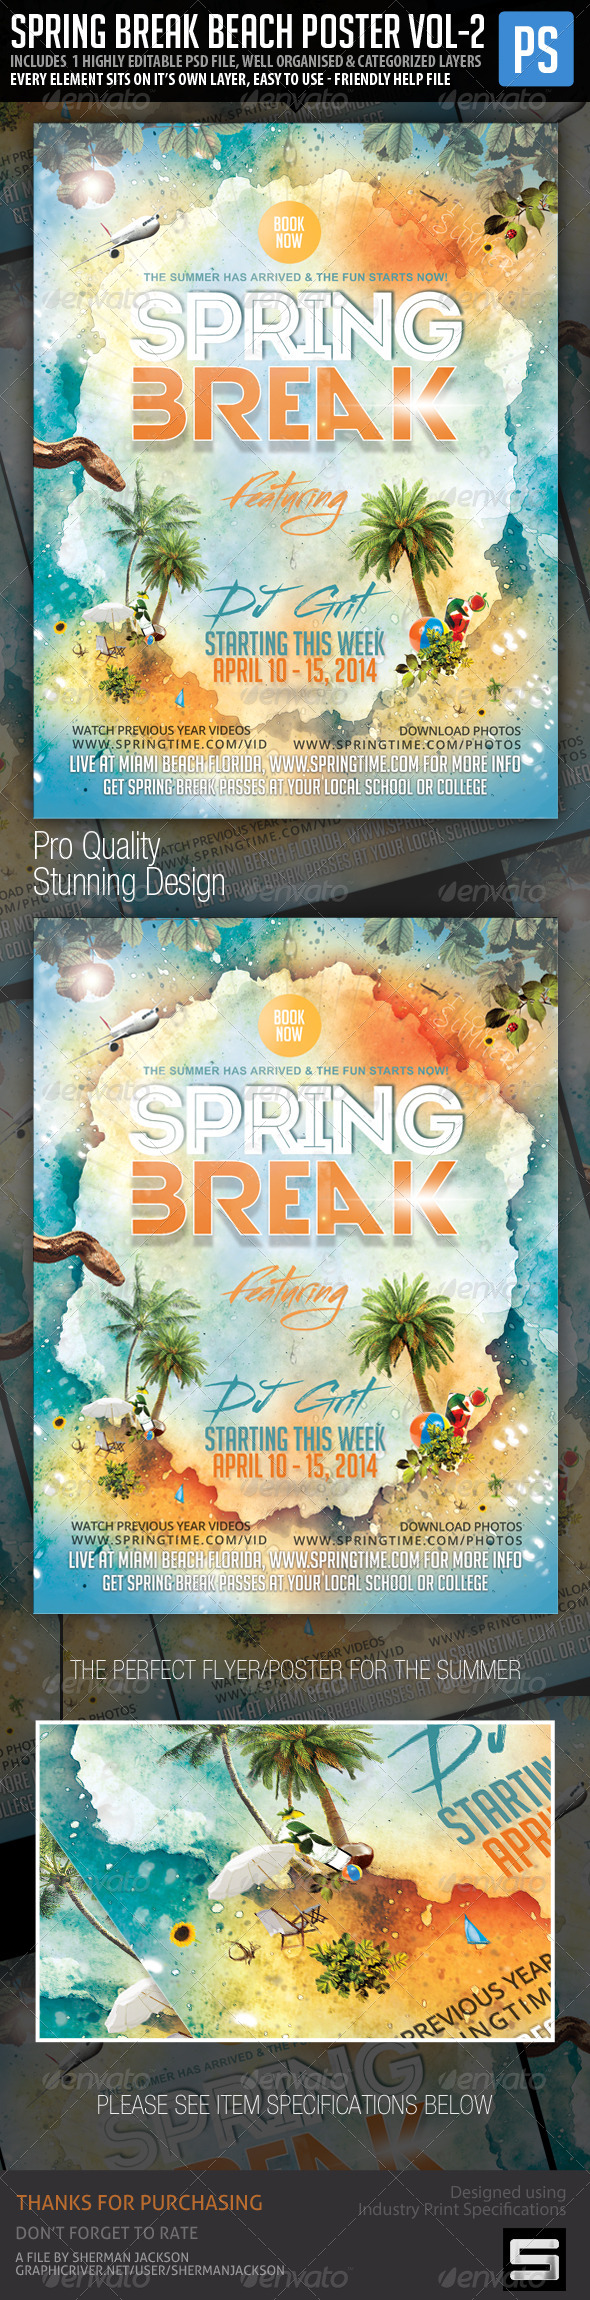 Spring Break Beach Party Vol.2 Poster/Flyer